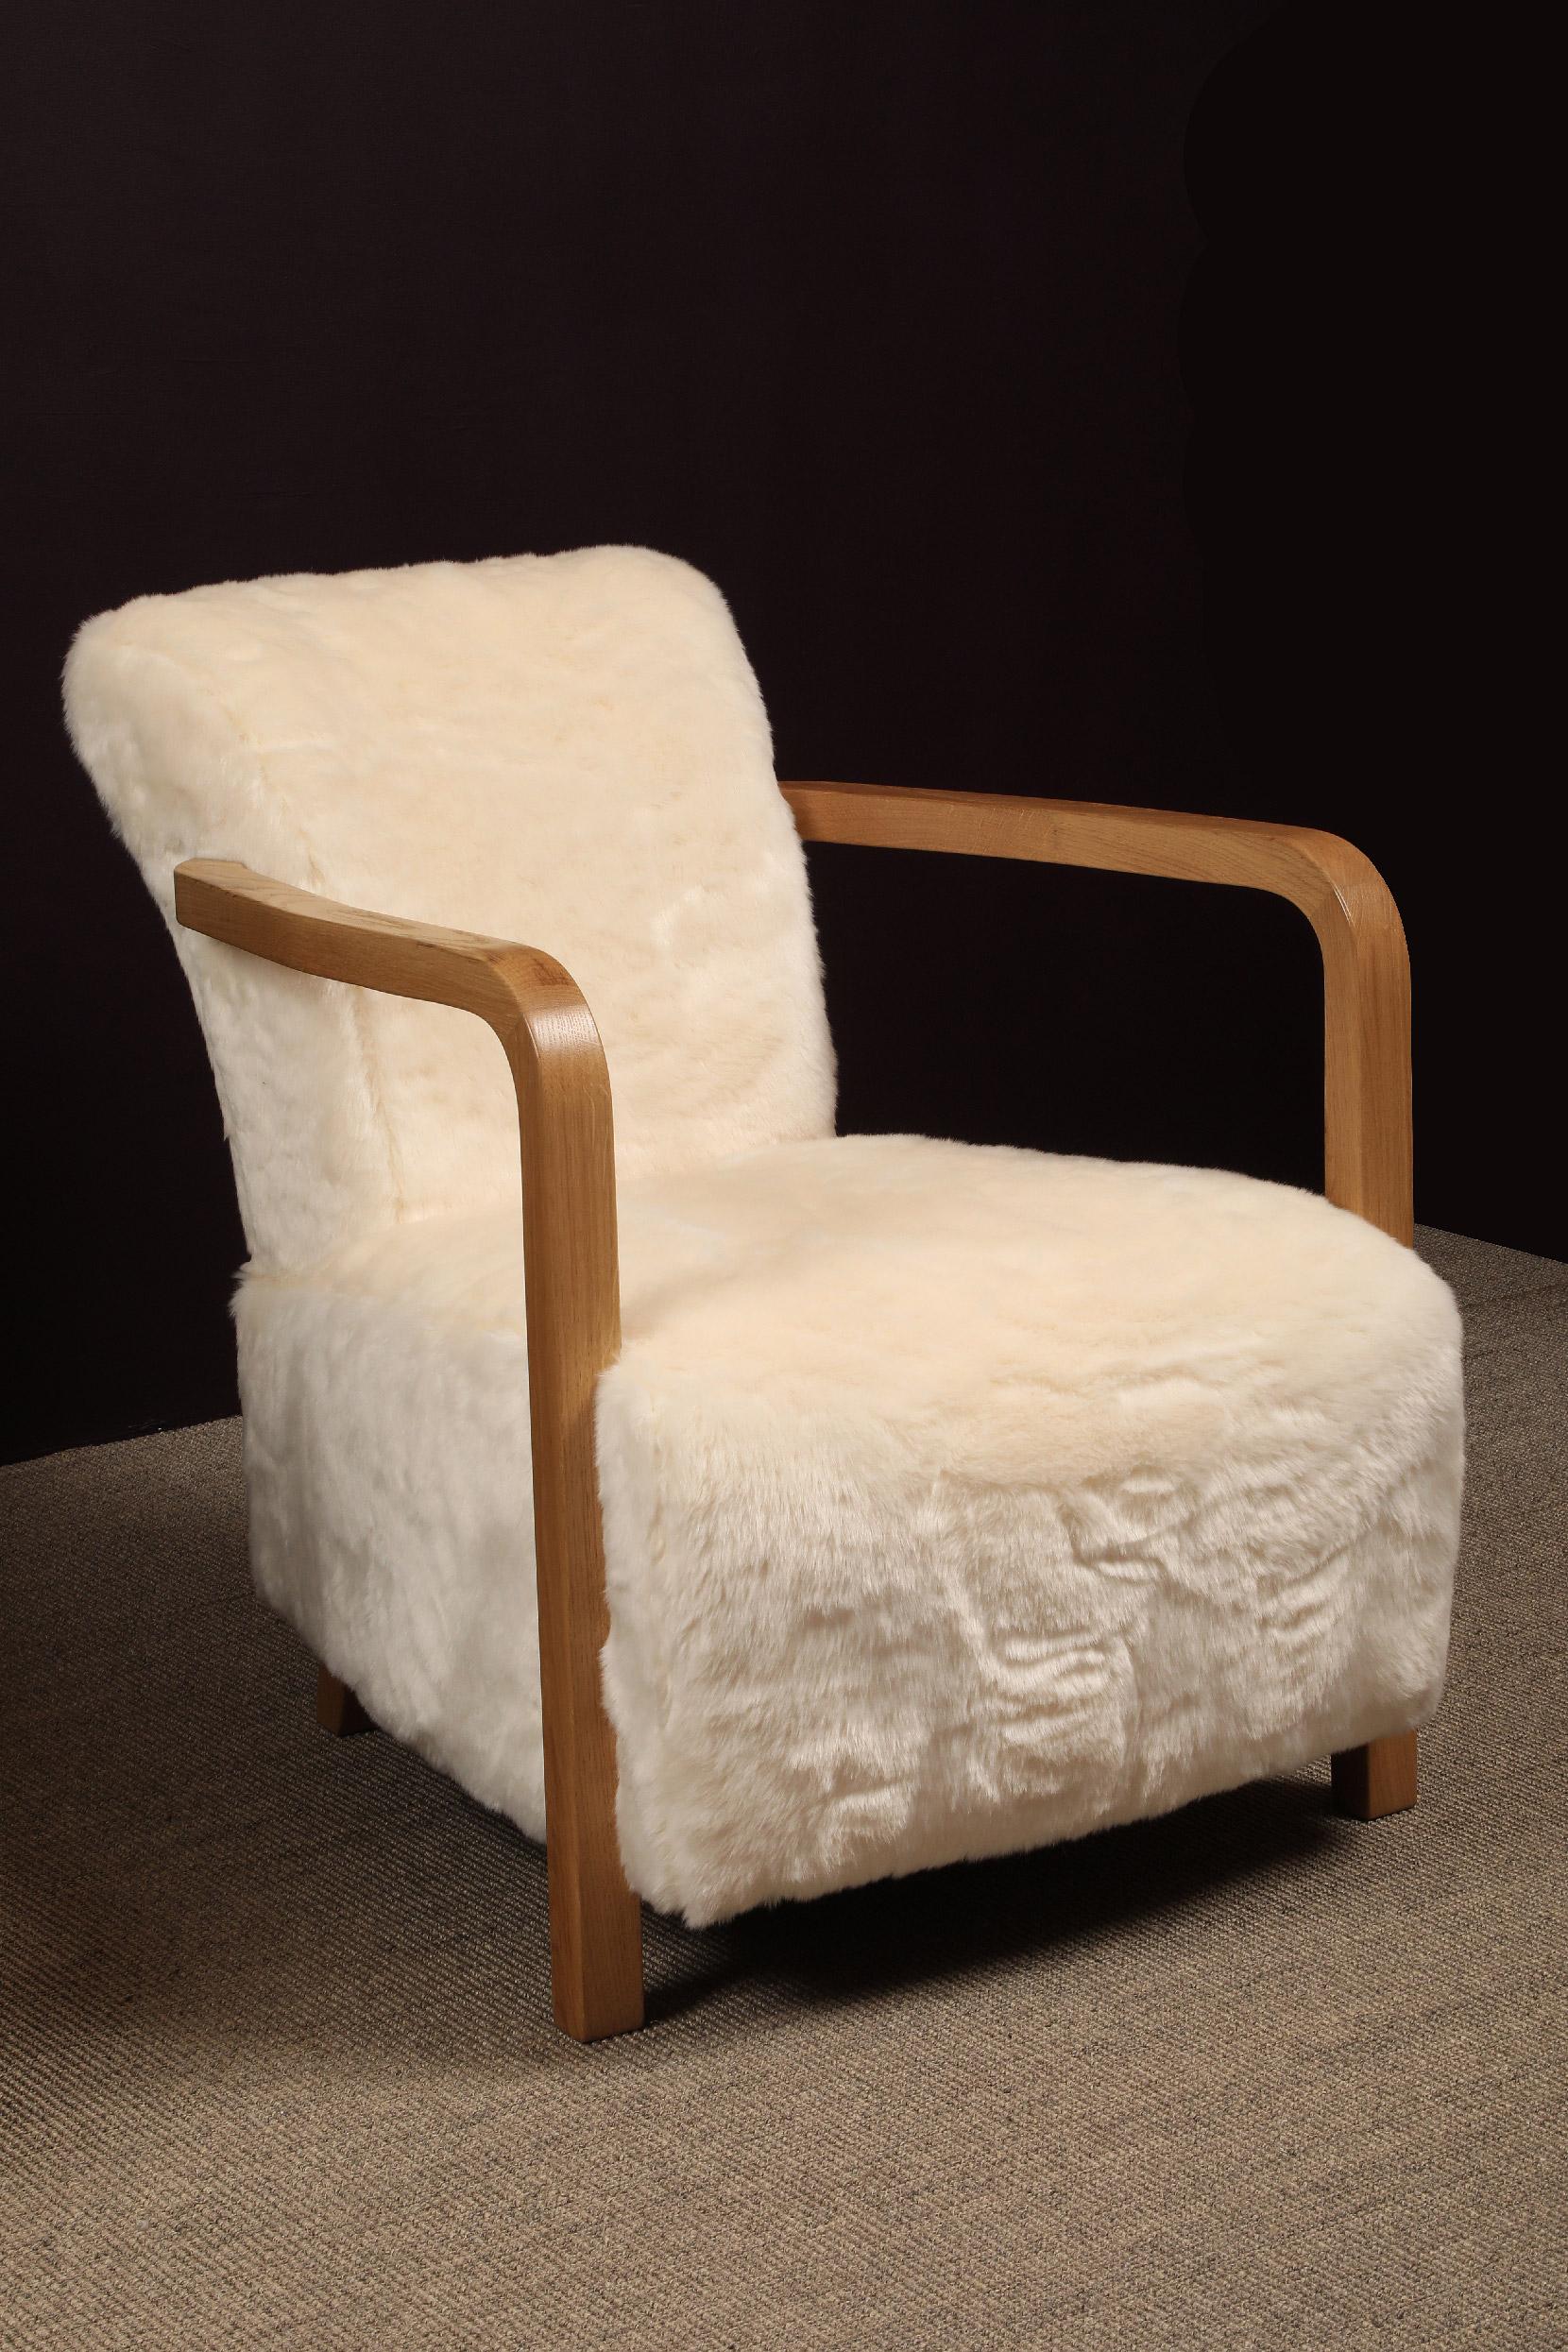 Baa Baa armchair from Top Secret Furniture